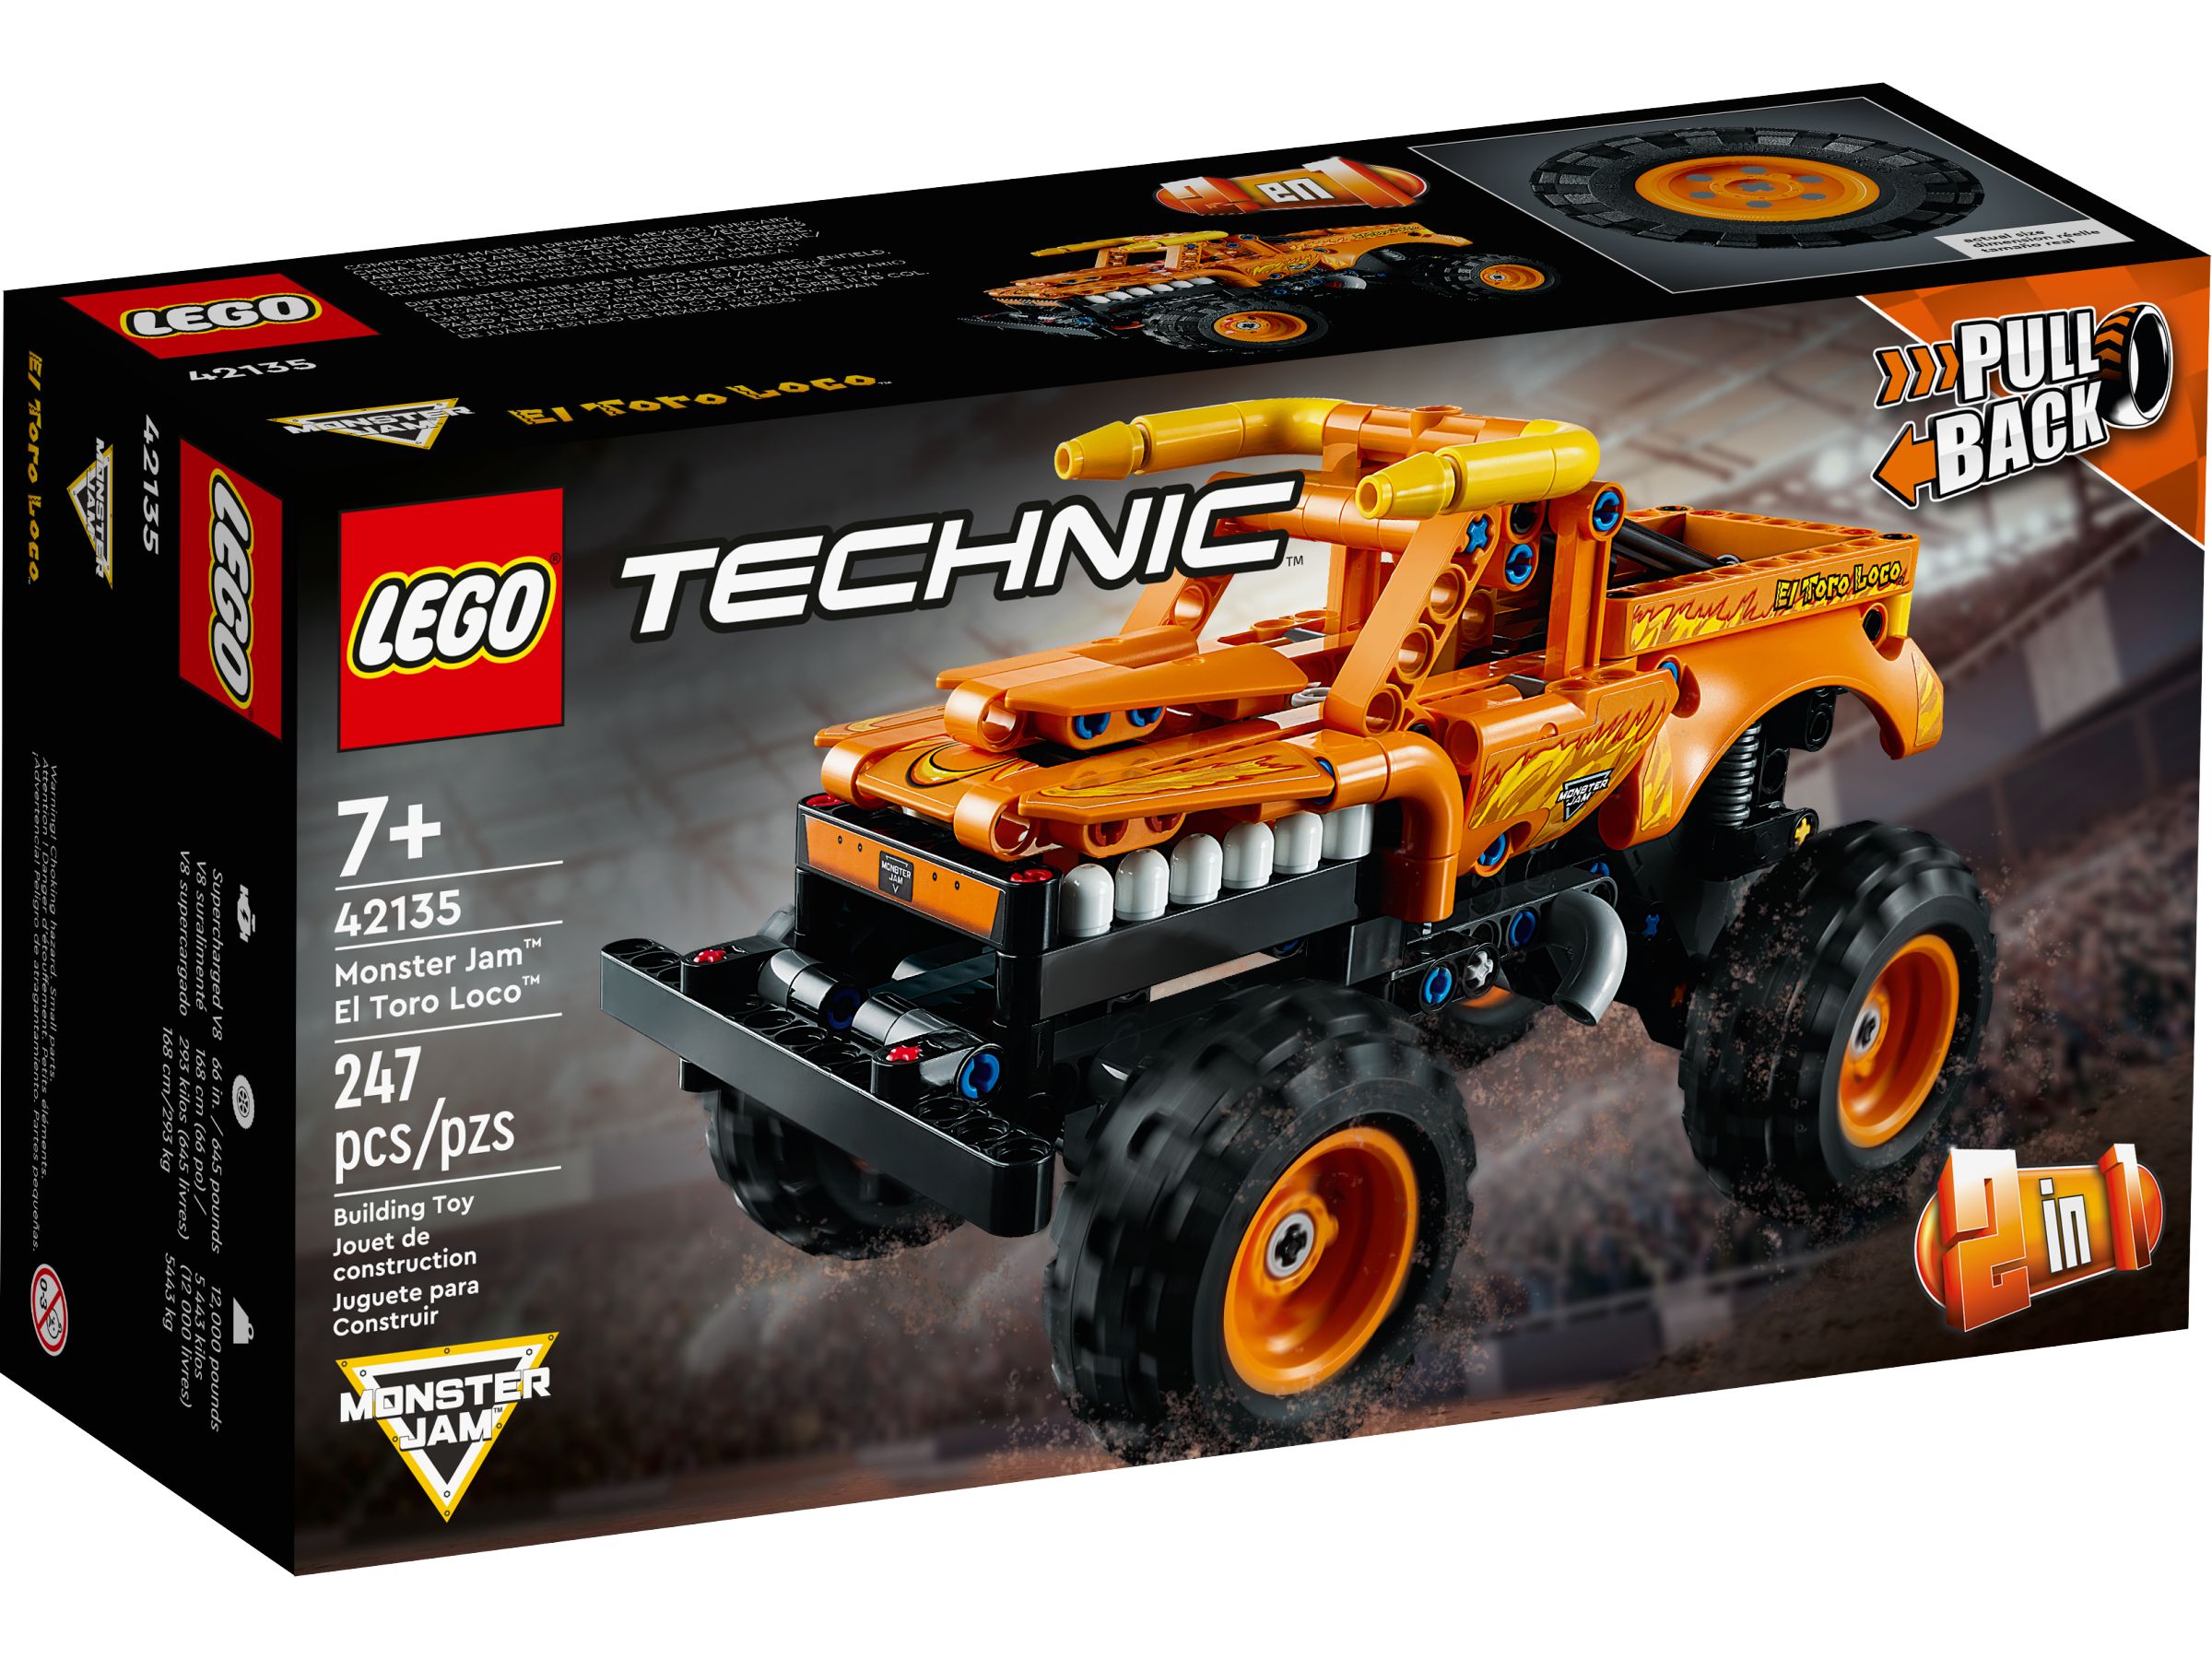 LEGO Technic 42135 Monster Jam™ El Toro Loco™ LEGO_42135_alt1.jpg